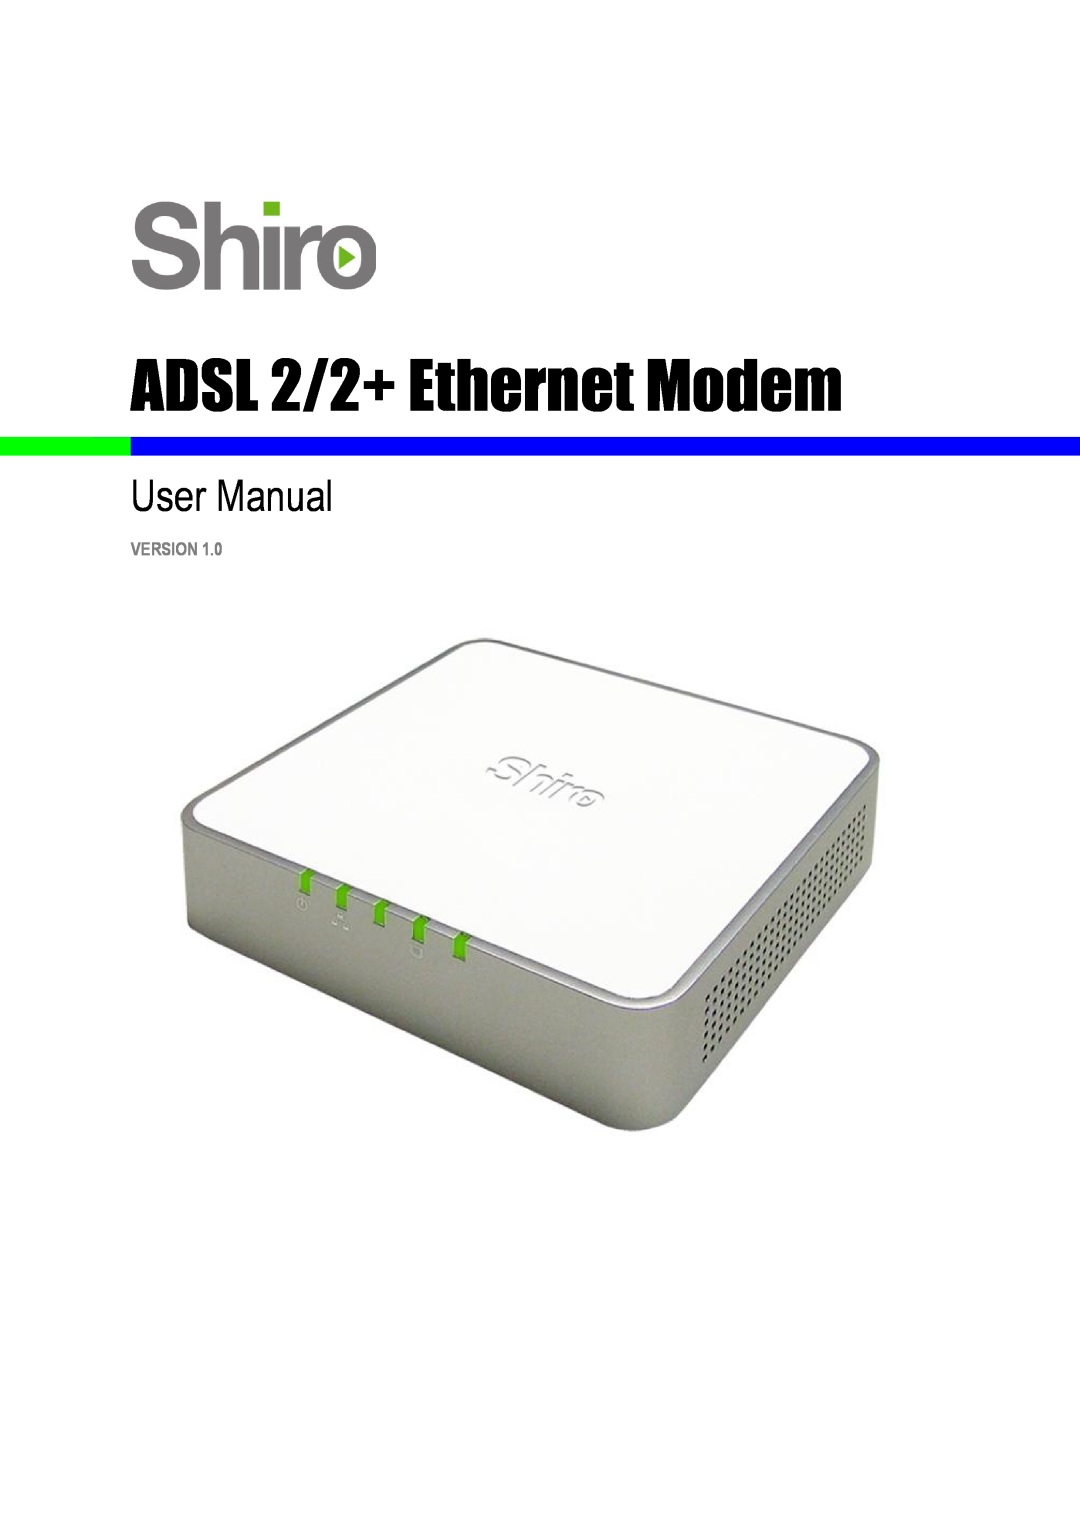 Shiro ADSL 2/2+ Ethernet Modem manual User Manual, Version 